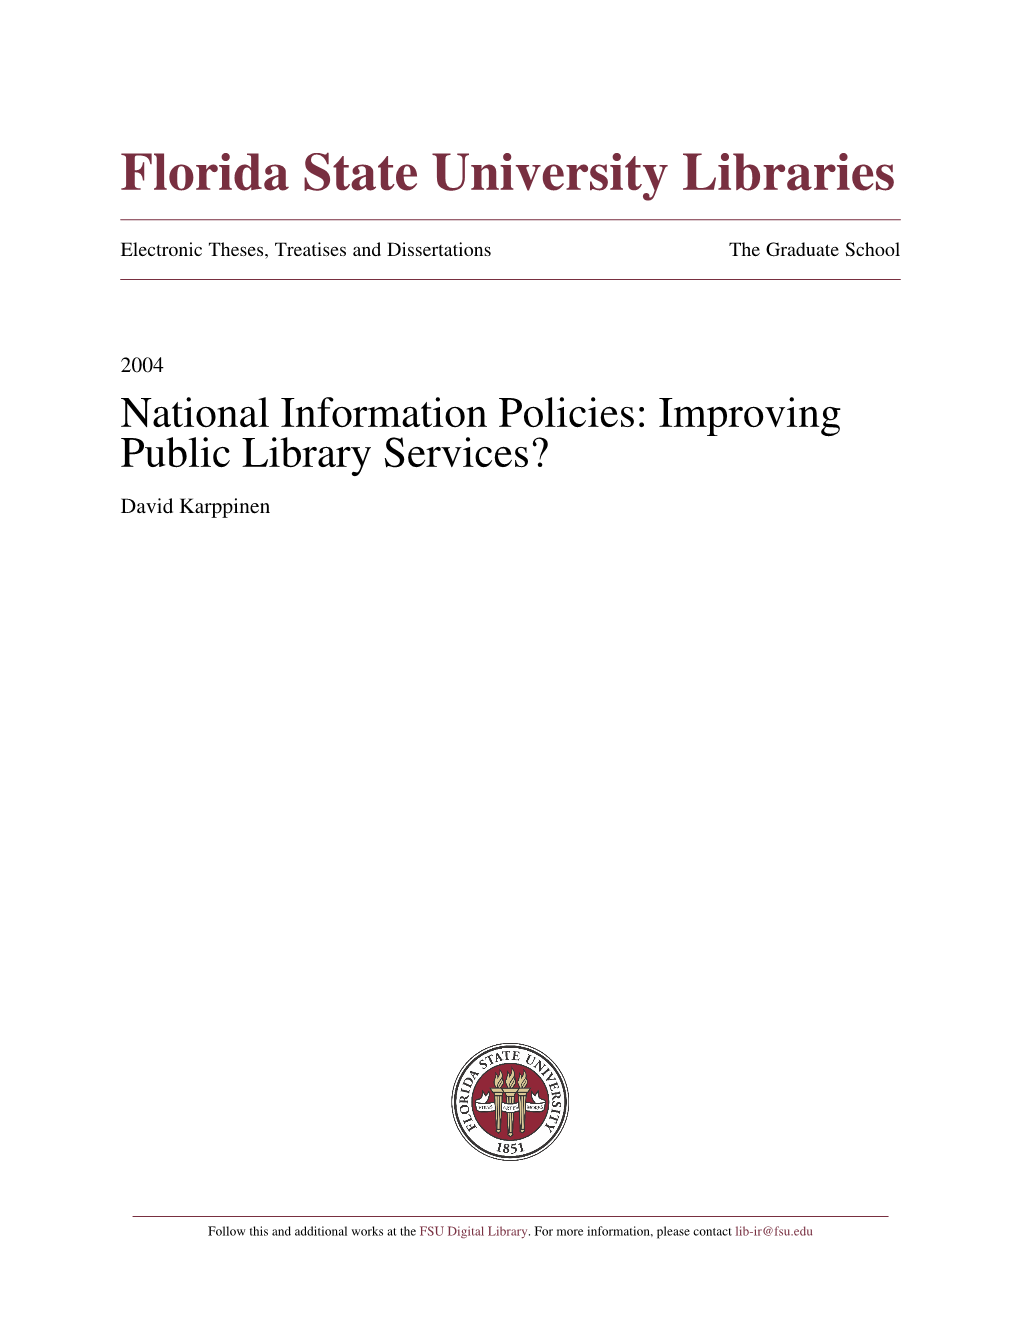 National Information Policies: Improving Public Library Services? David Karppinen